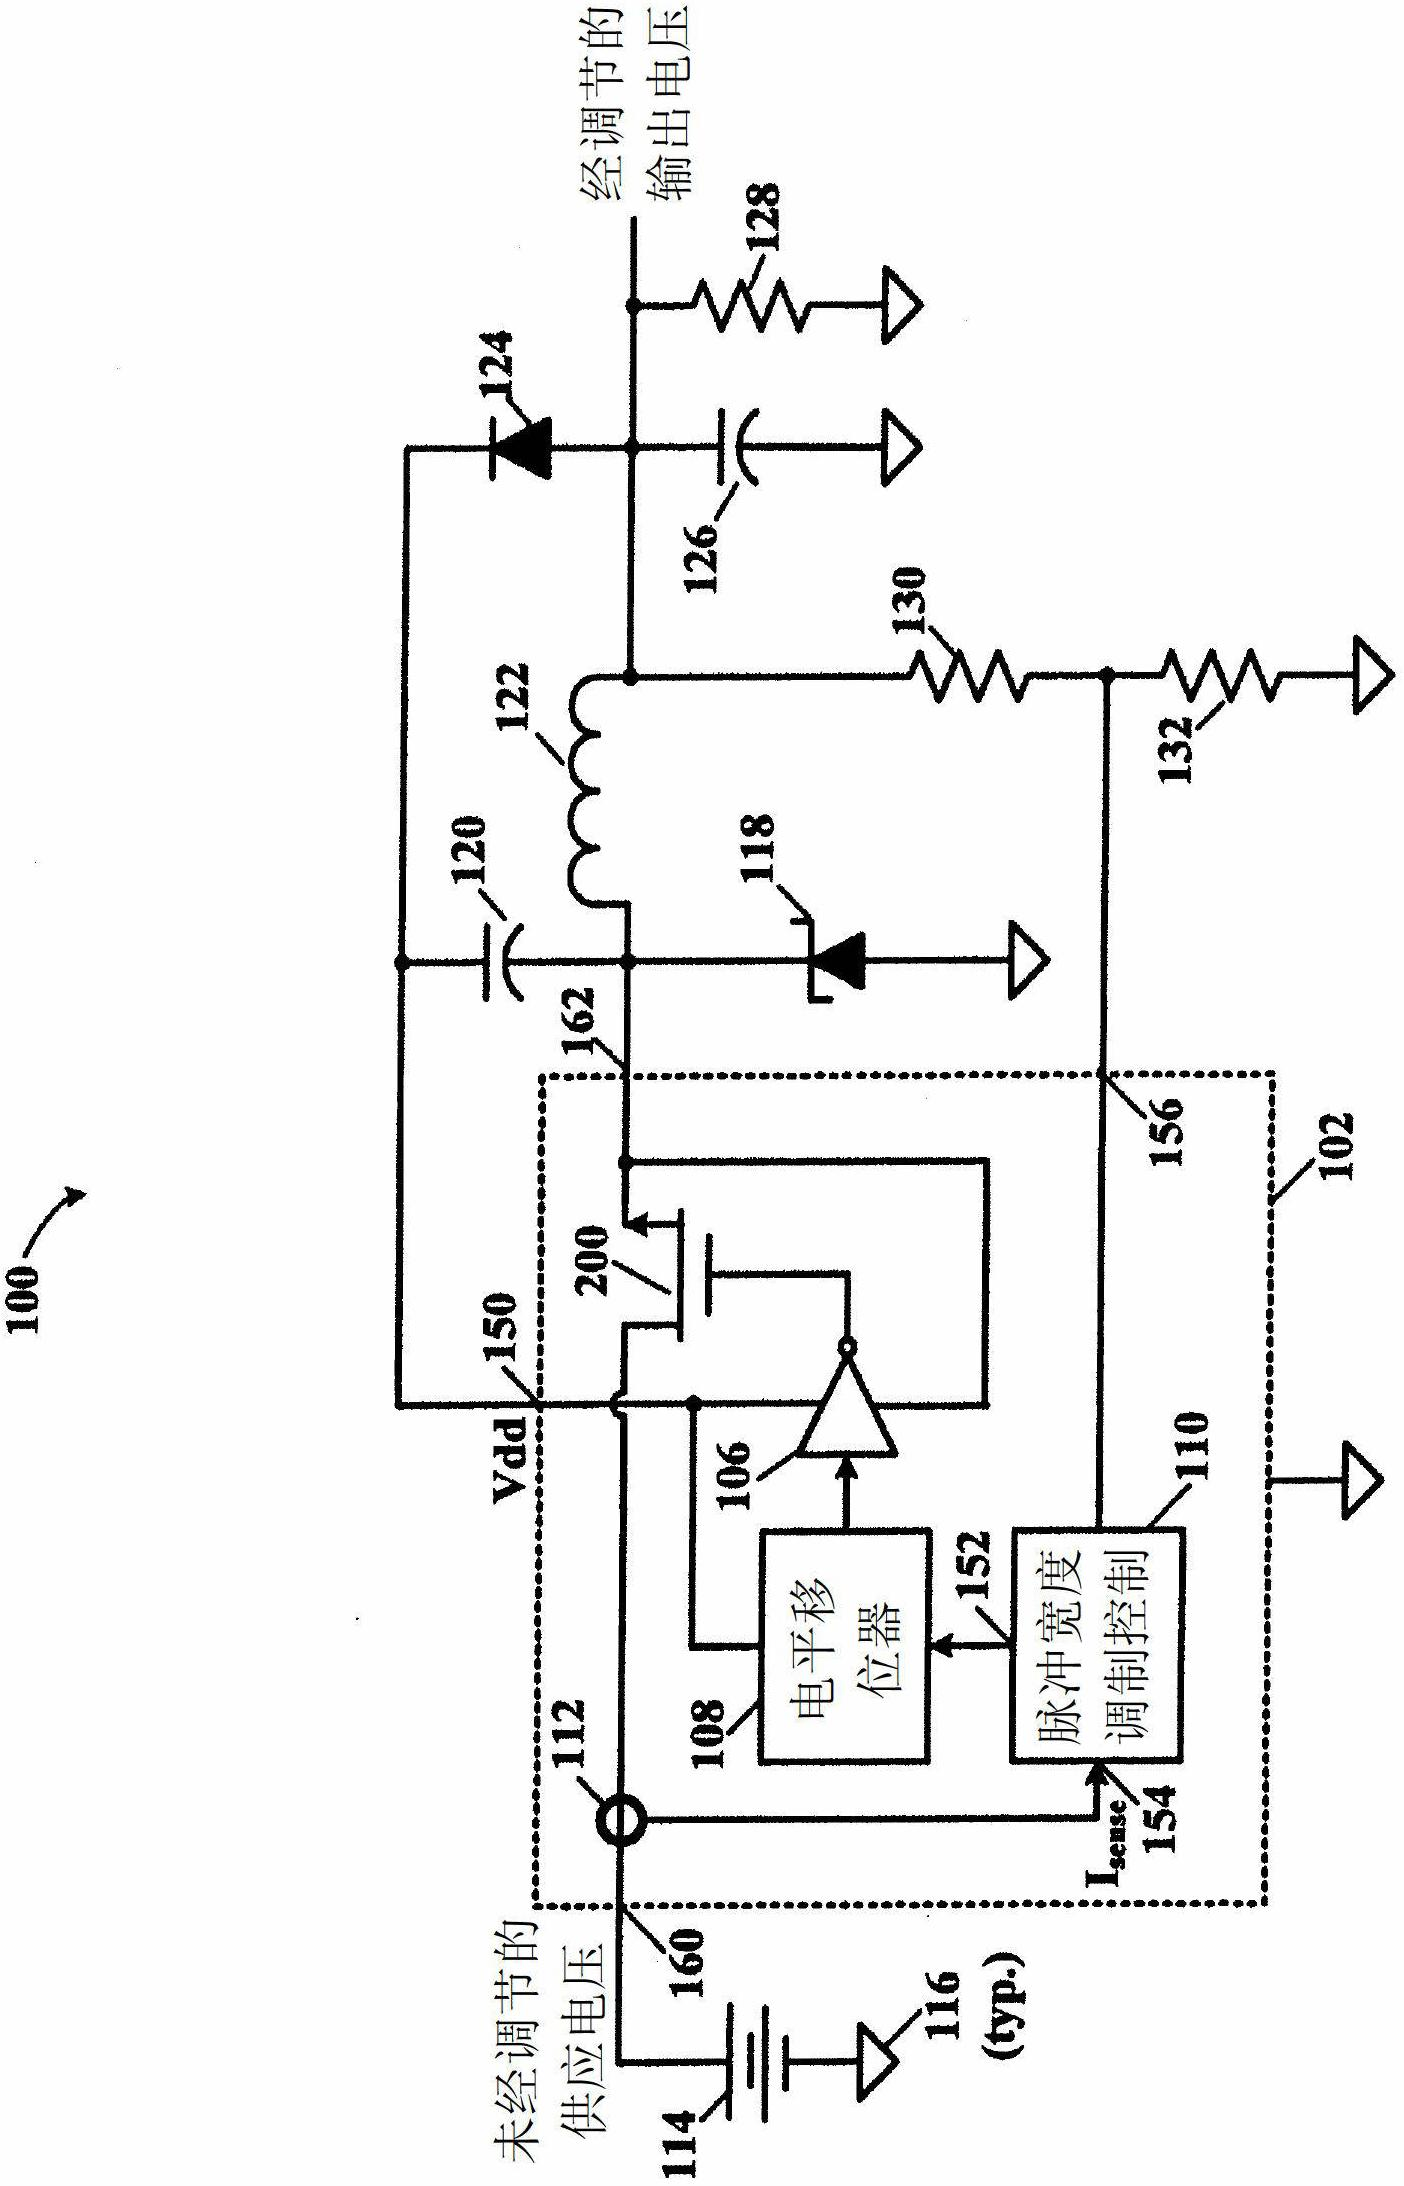 Effective current sensing for high voltage switching regulators